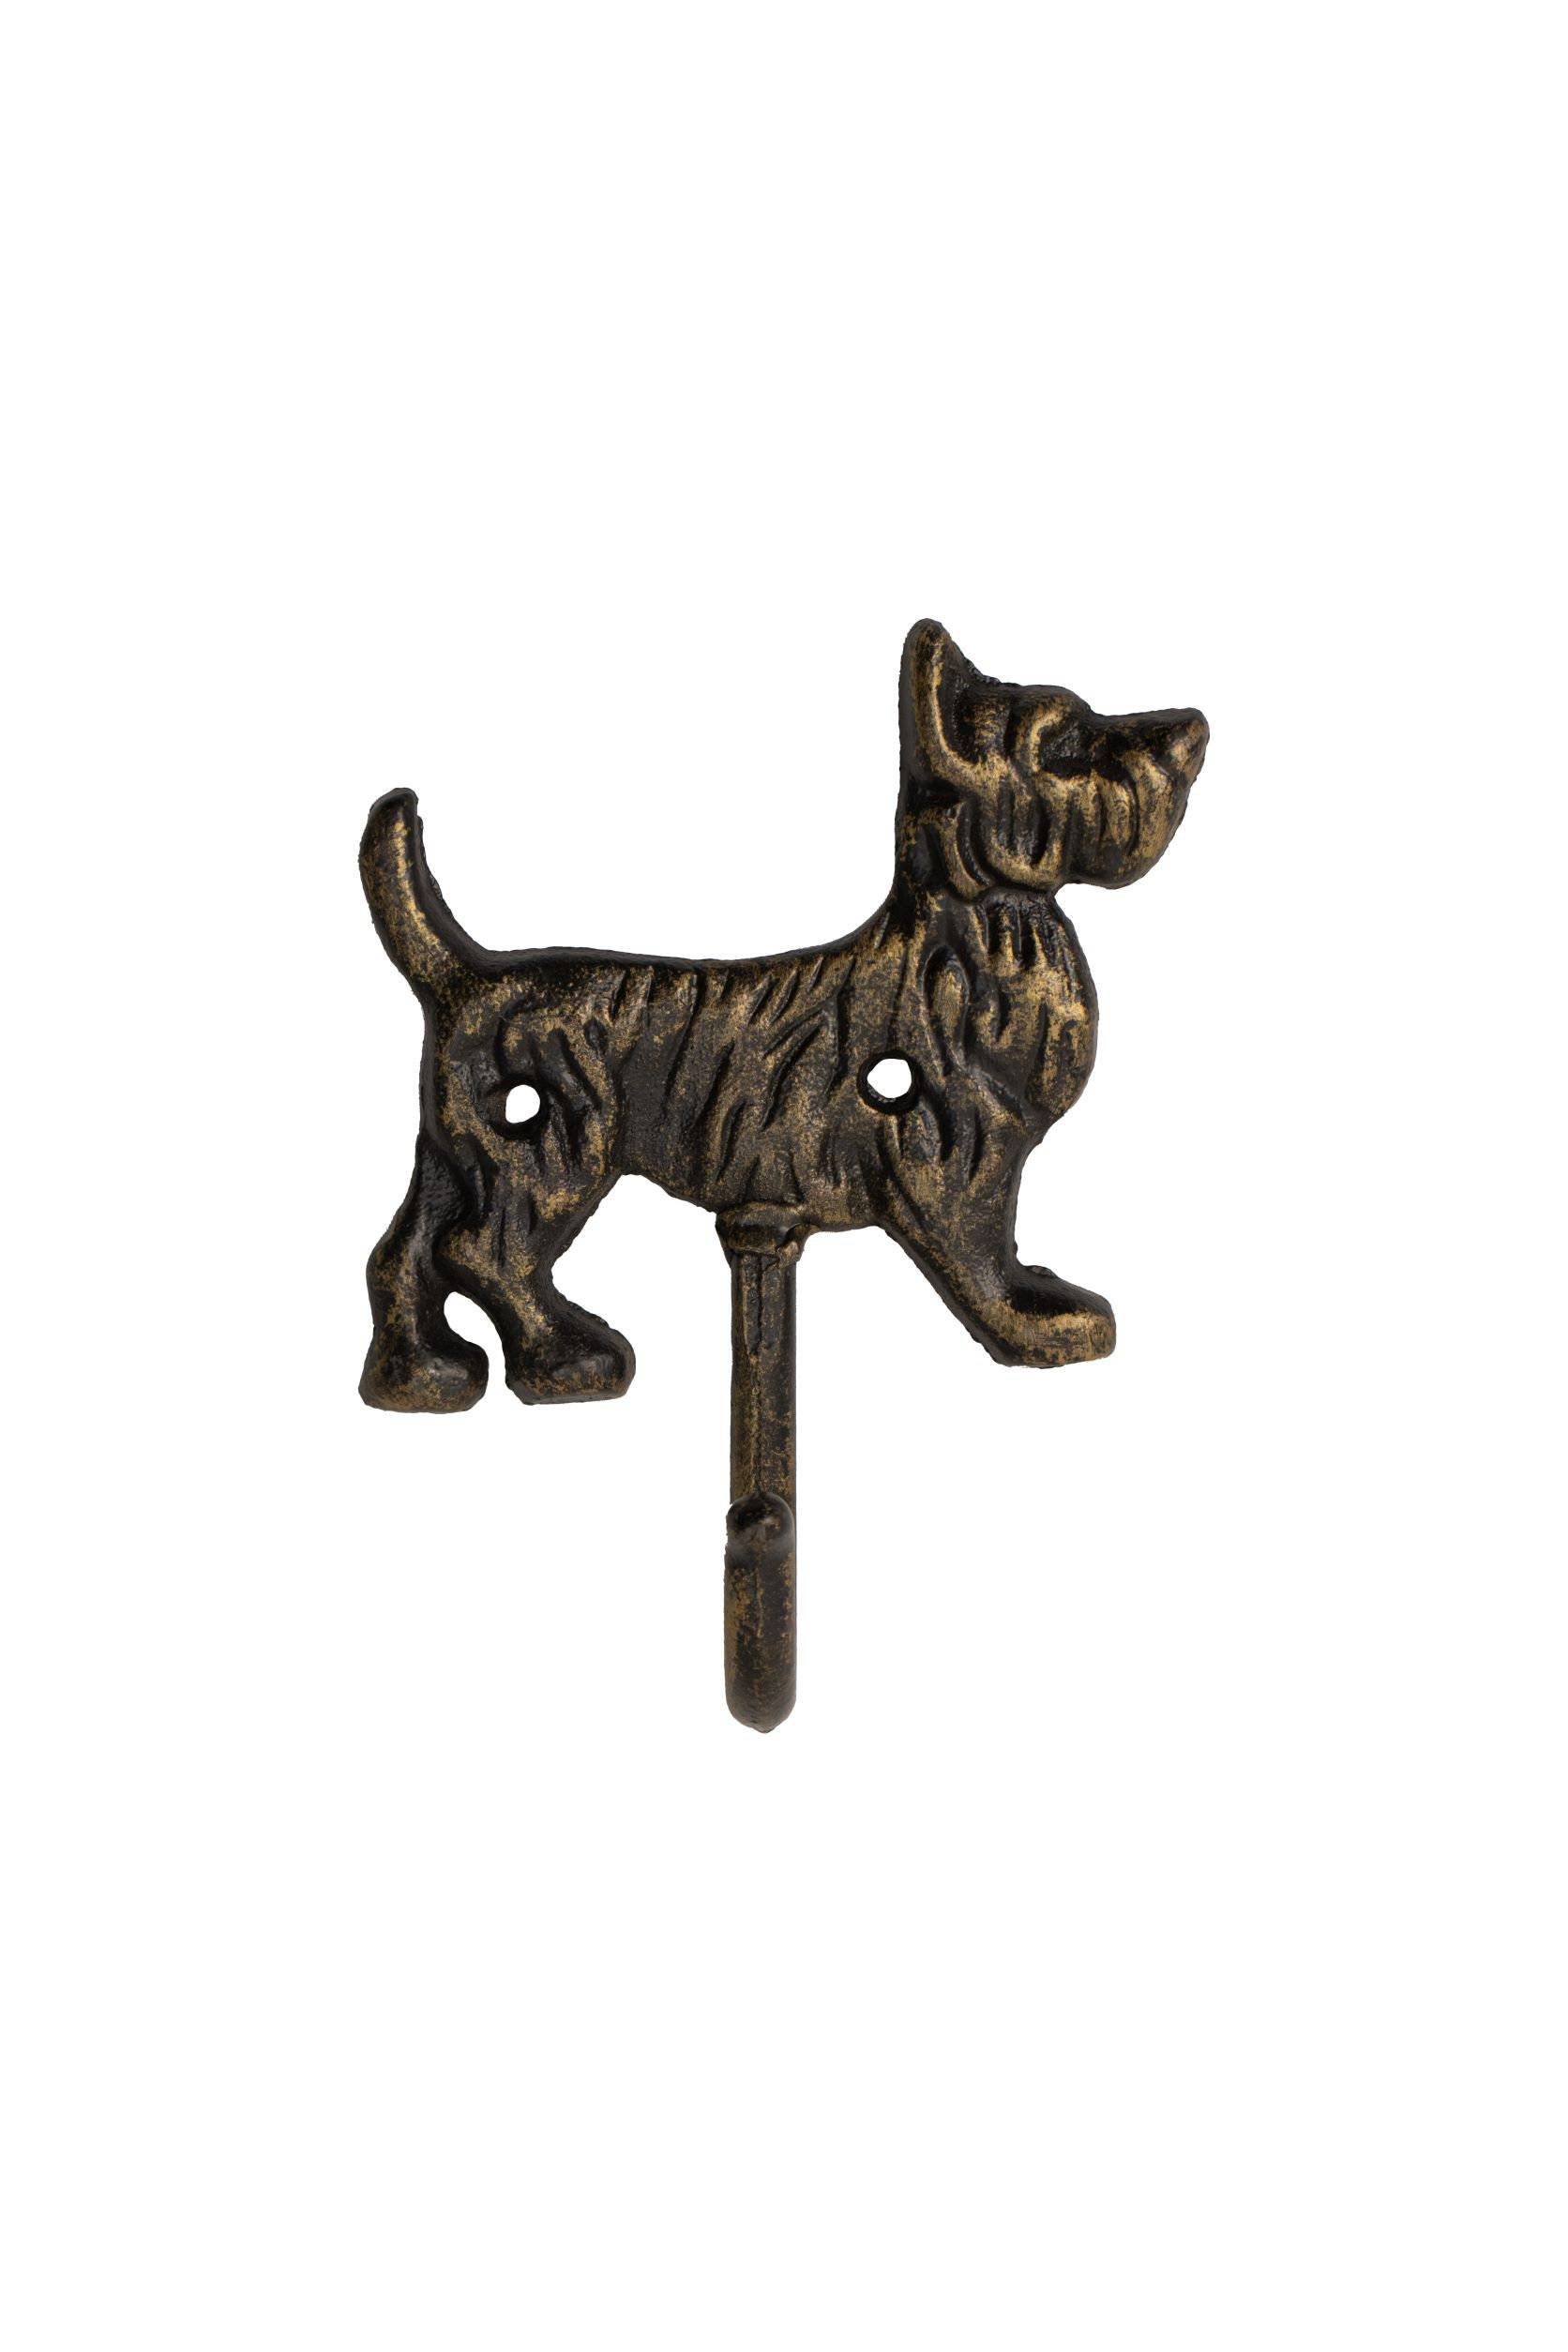 CAST IRON HOOK - FantasHome Wall Mounted Cast Iron Home Décor Single Hook  (Dog)